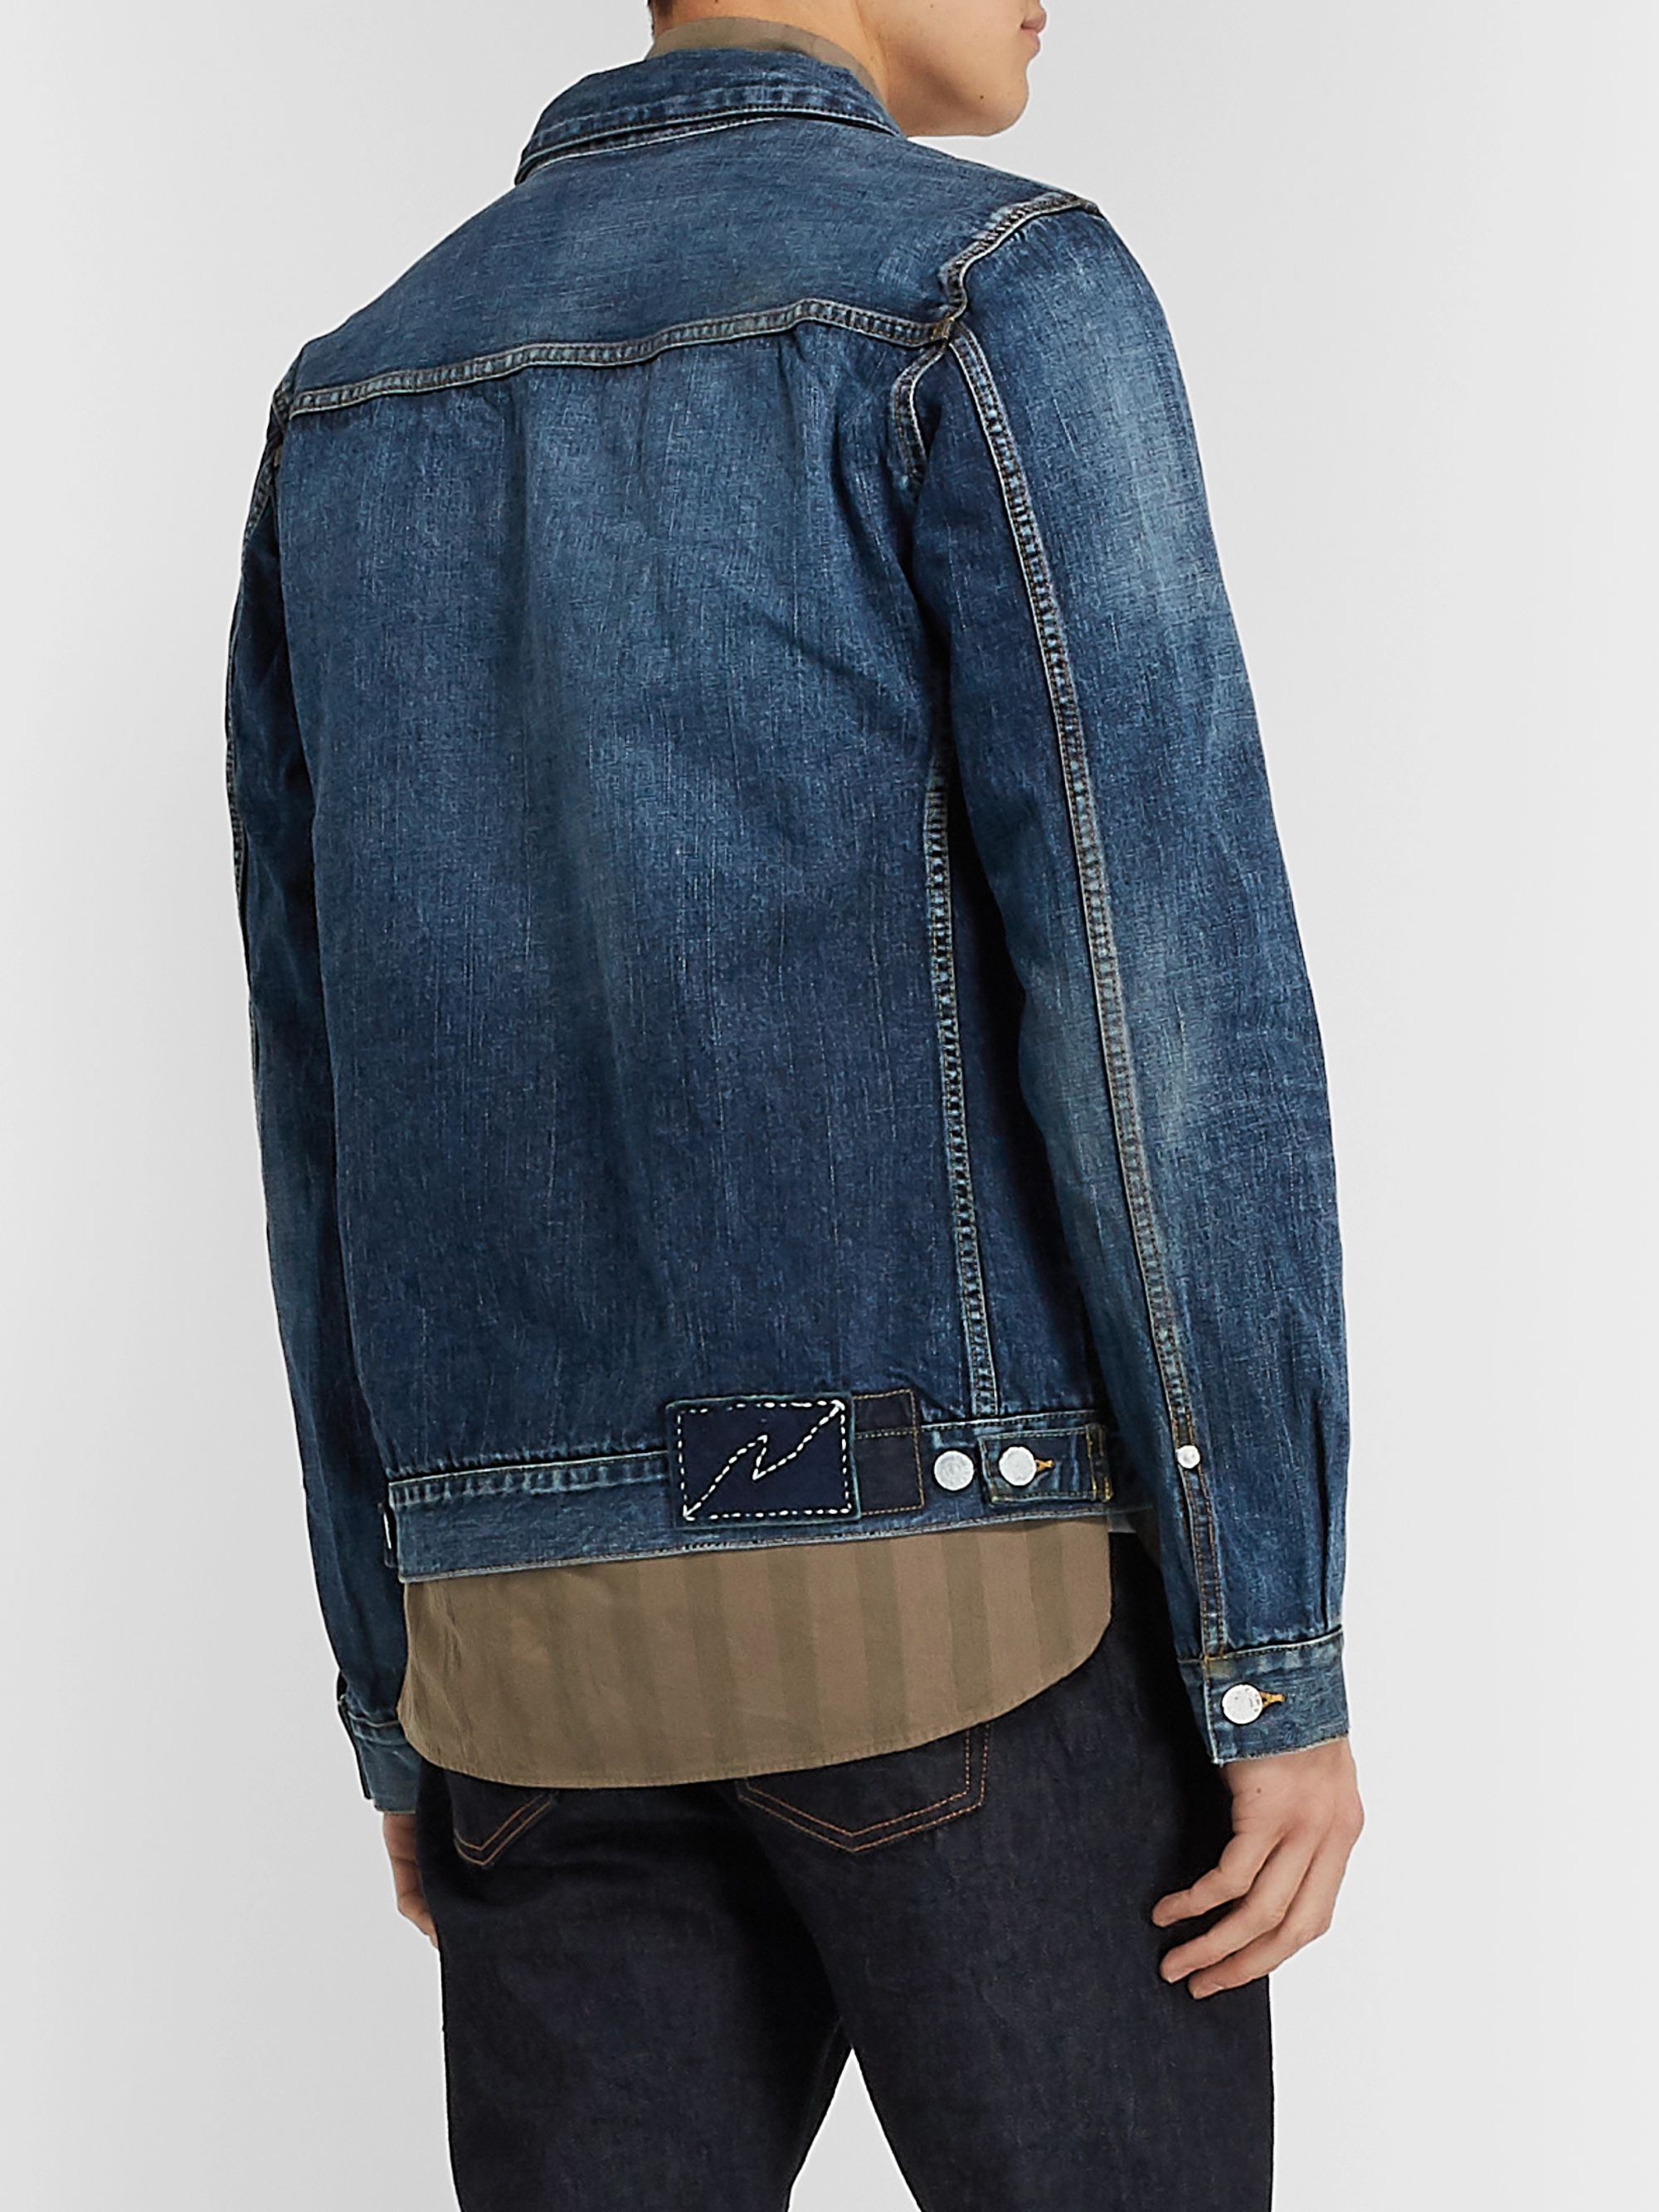 jeans jacket under 1000